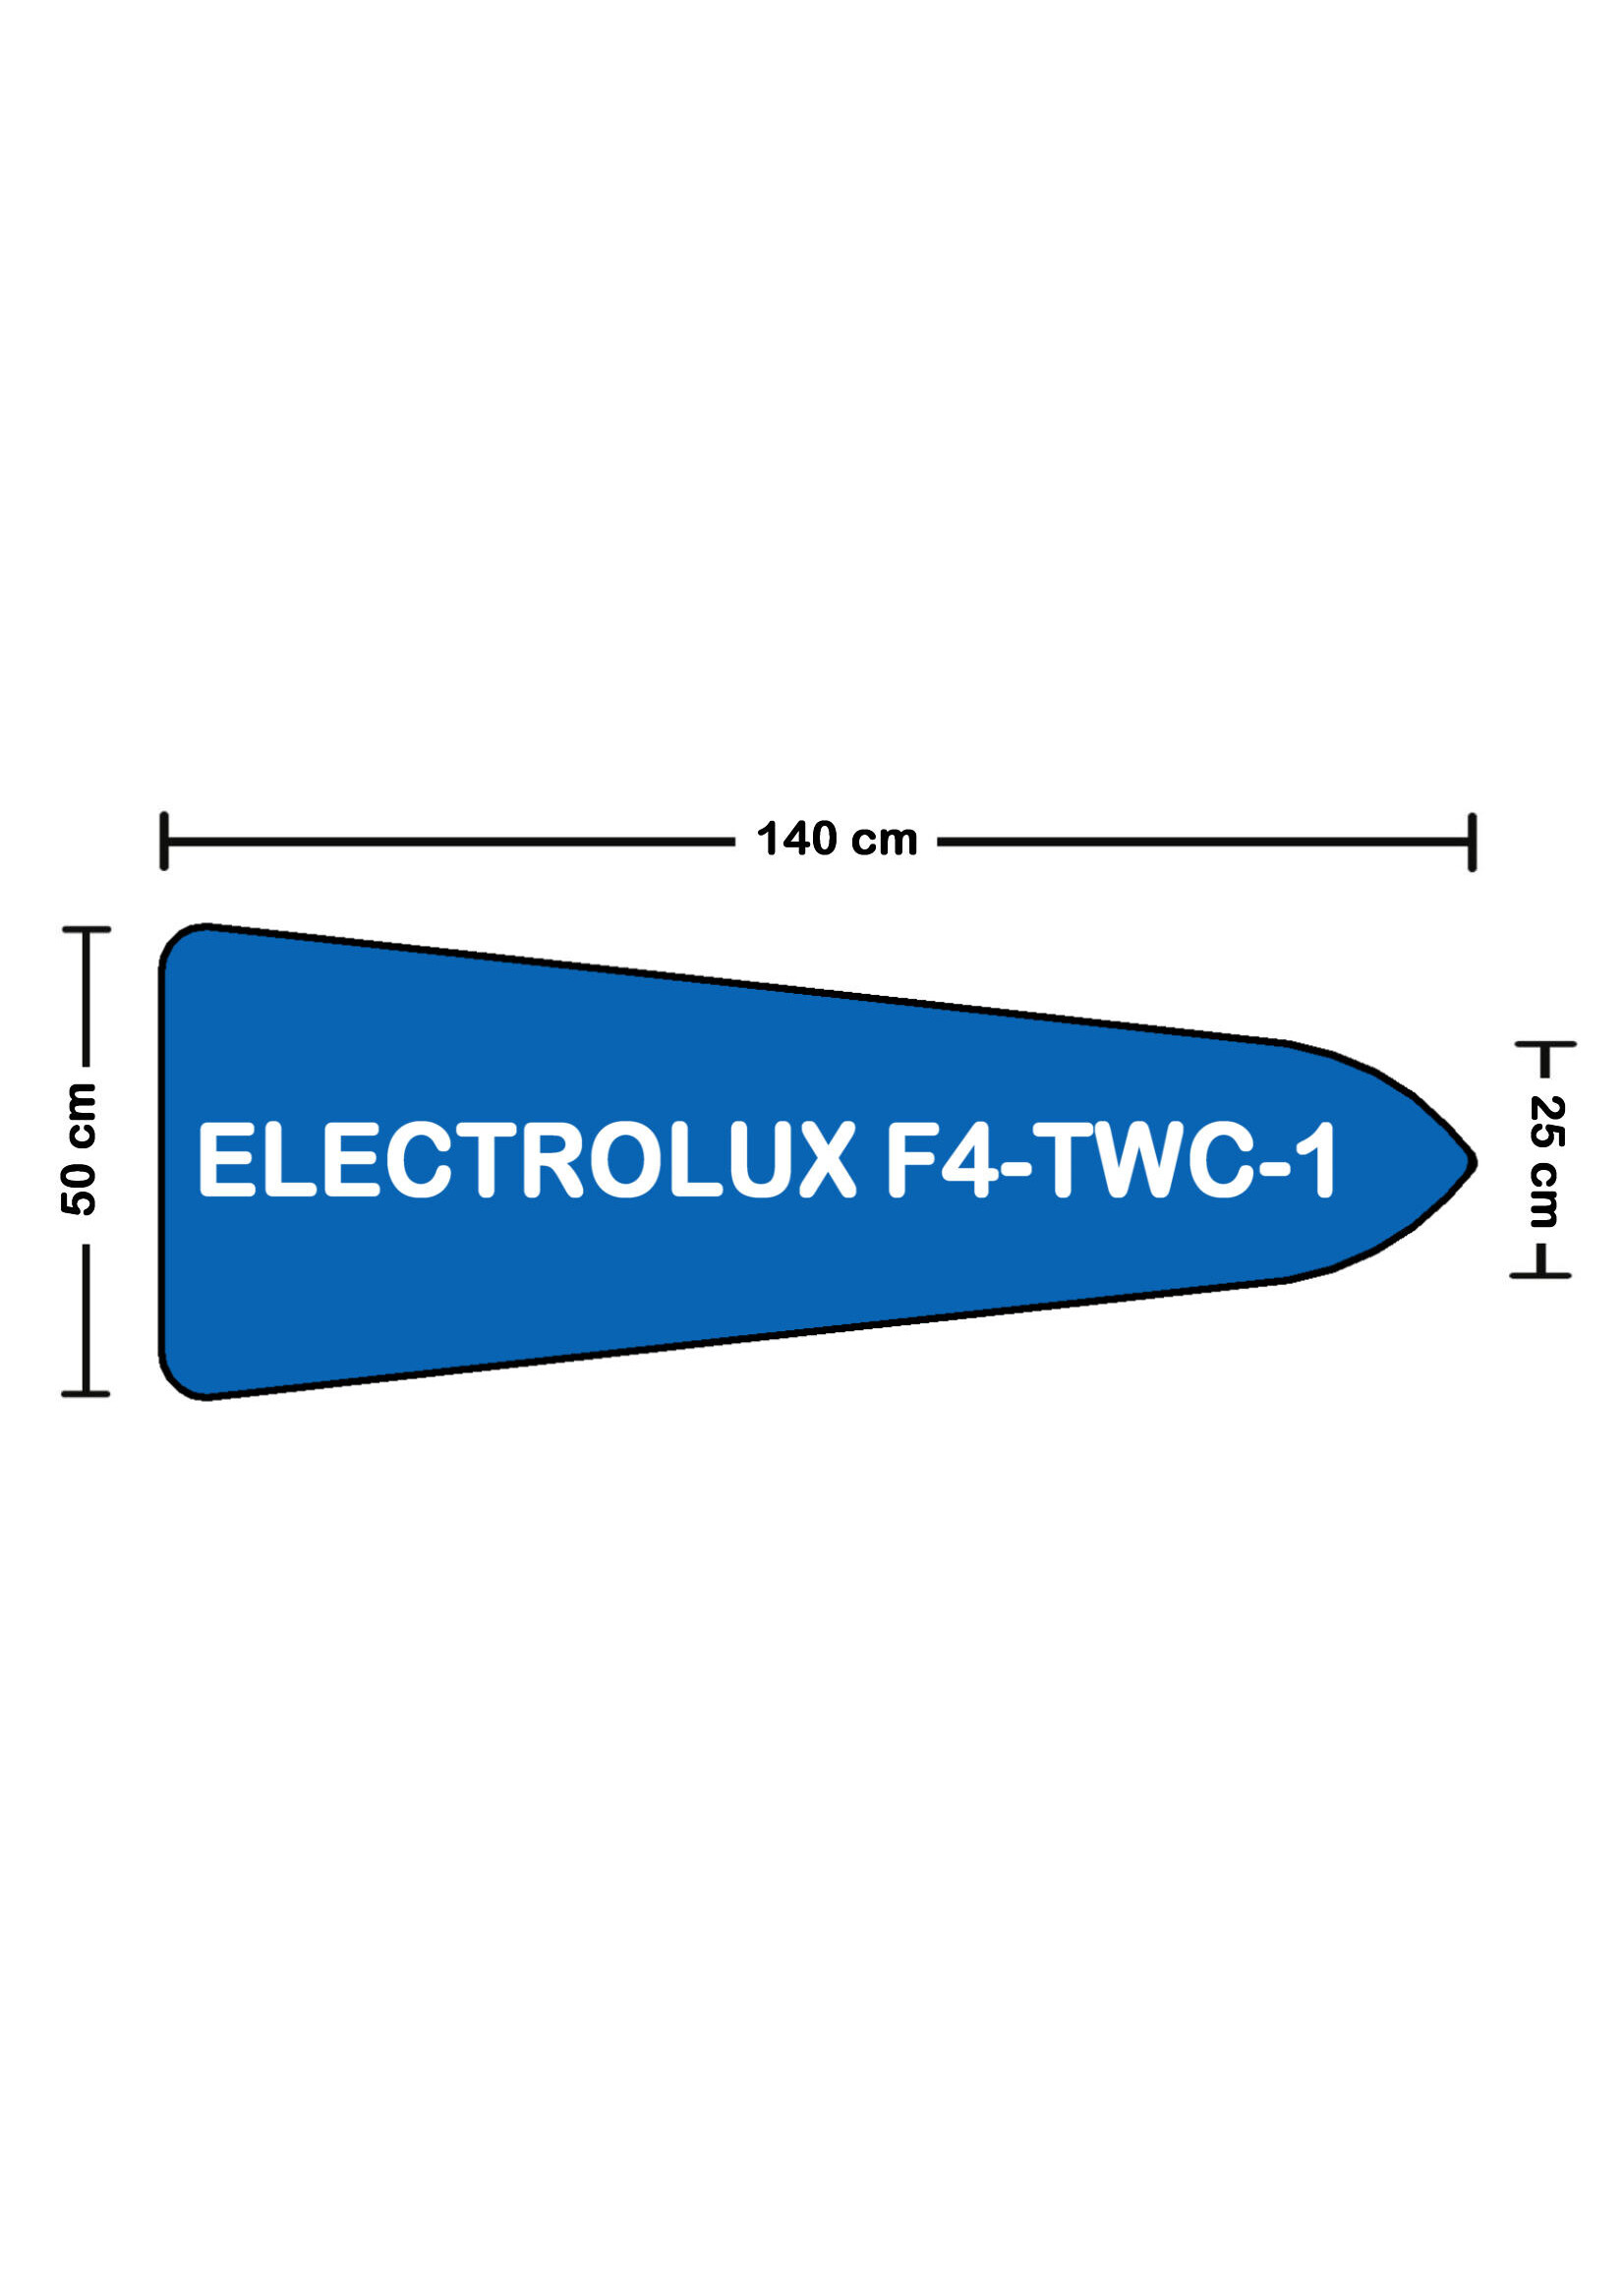 Solana Bekleding voor ELECTROLUX F4-TWC-1